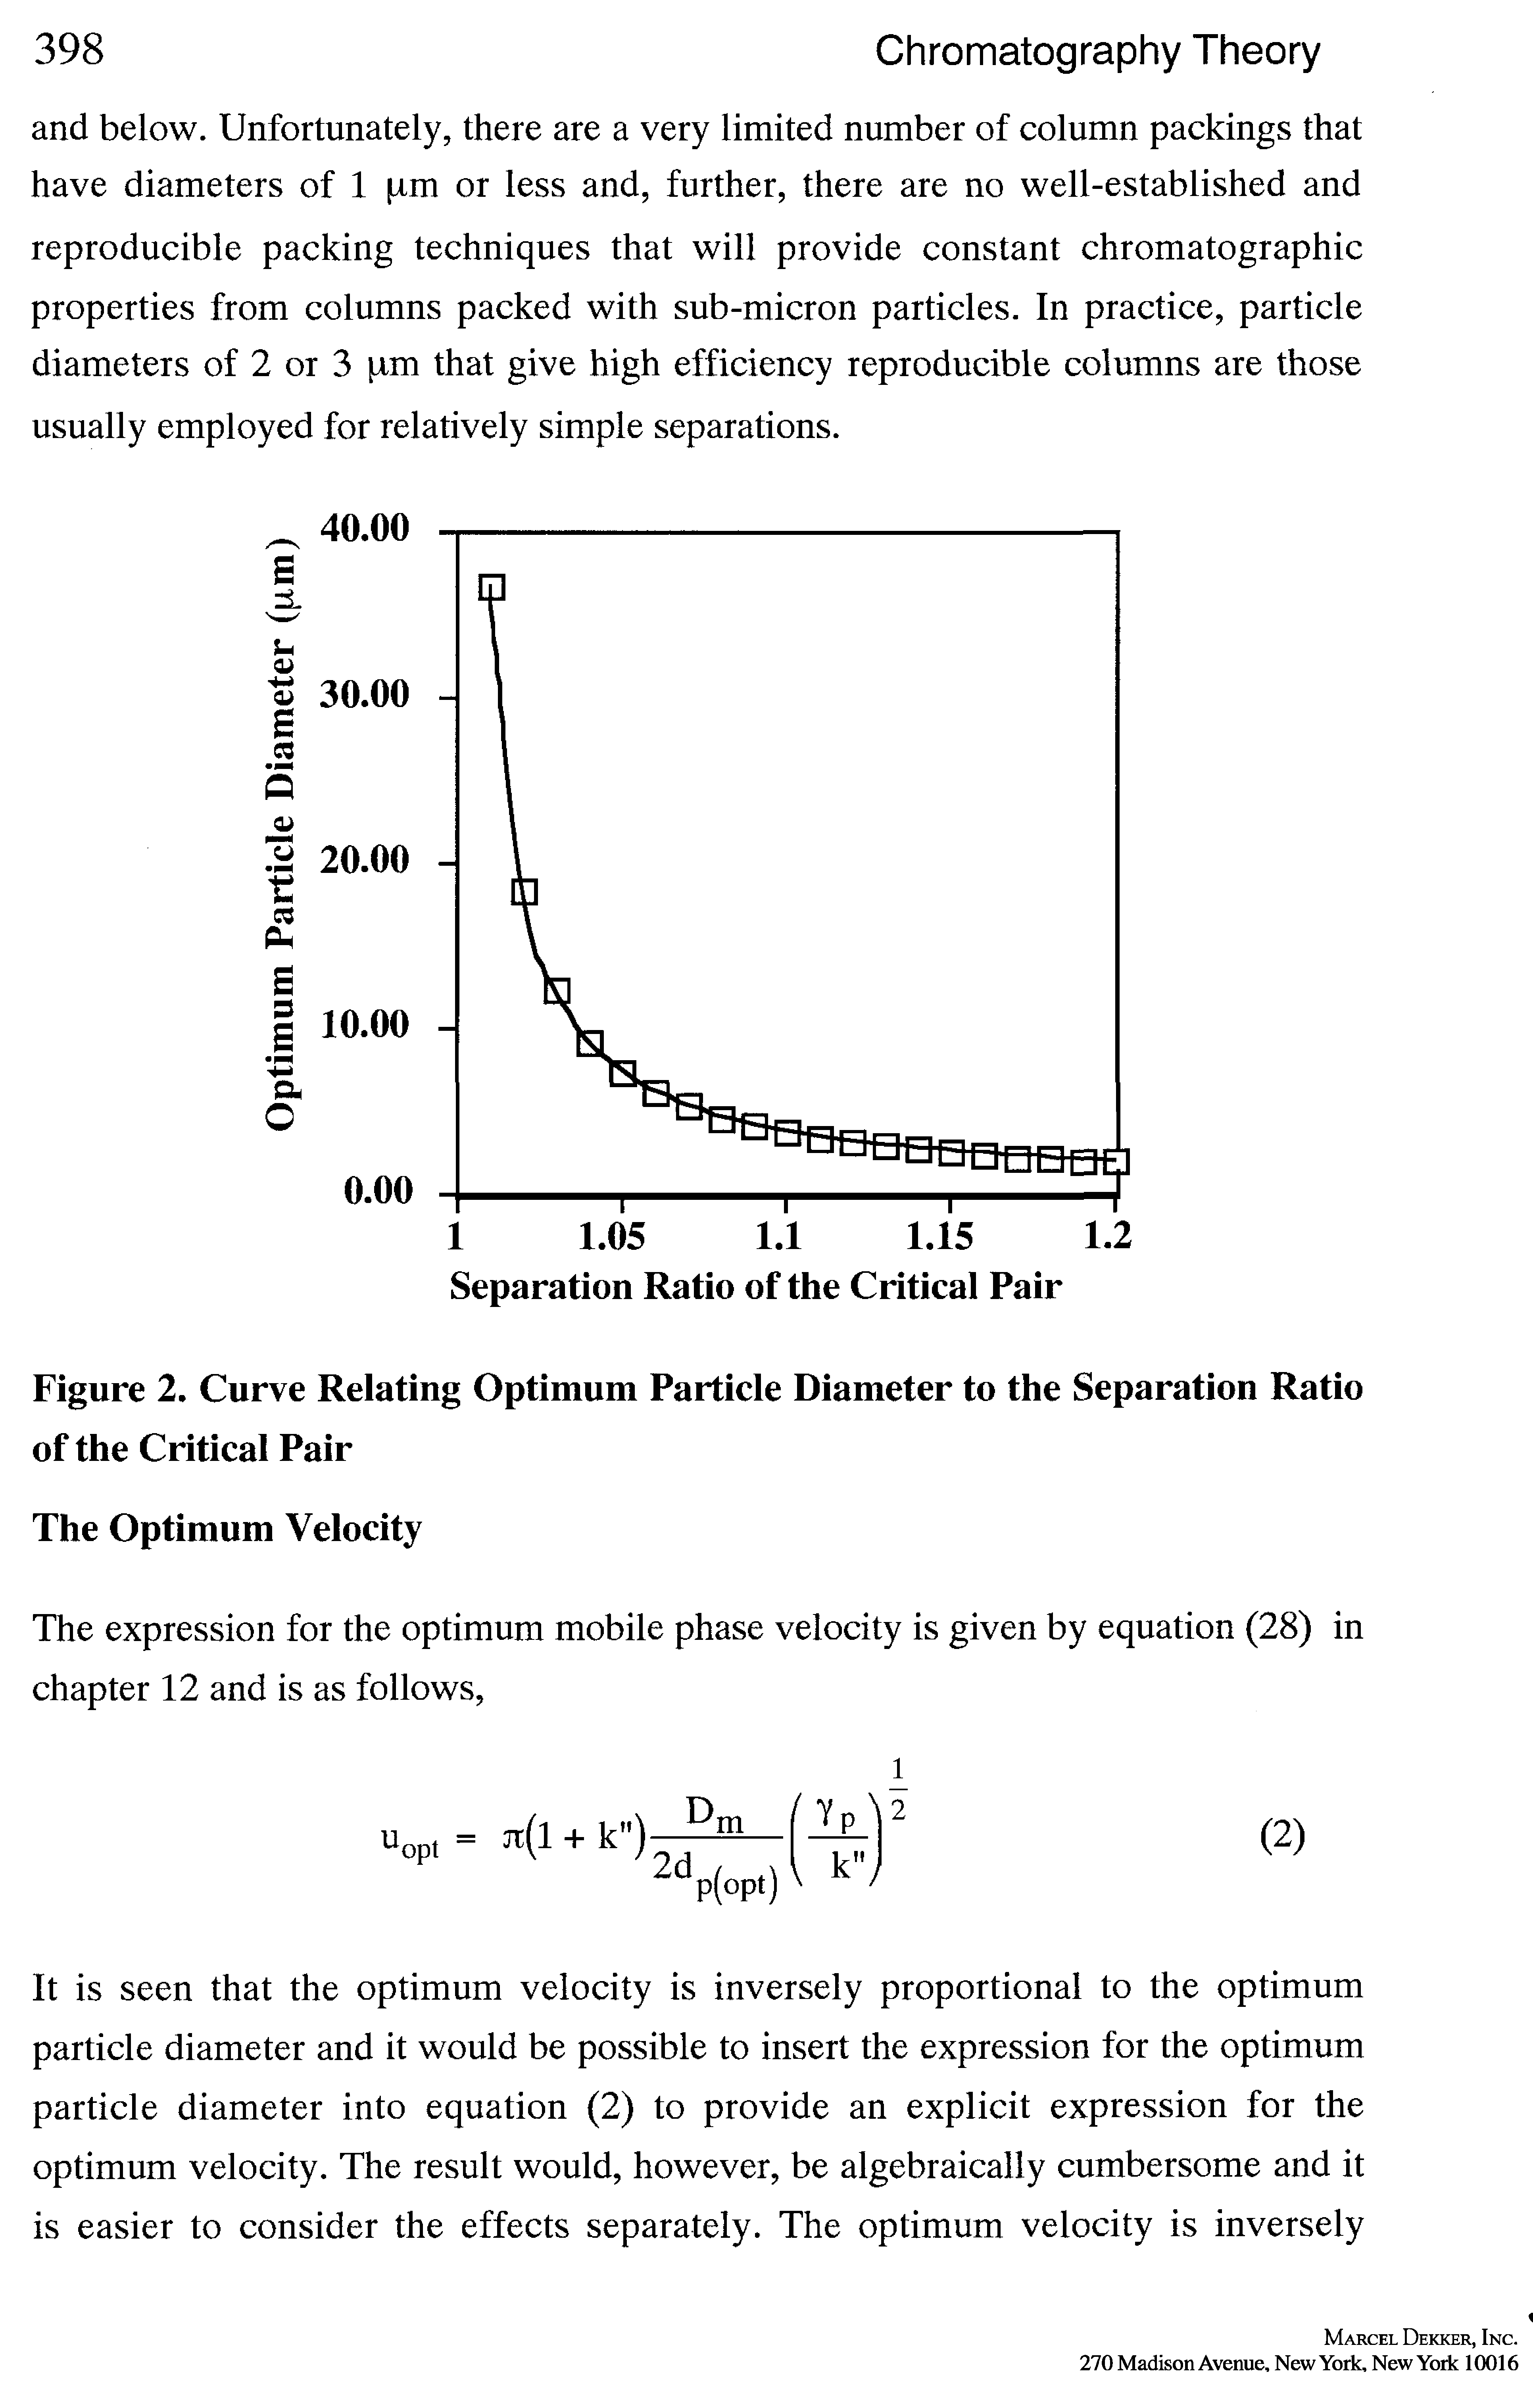 Figure 2. Curve Relating Optimum Particle Diameter to the Separation Ratio of the Critical Pair...